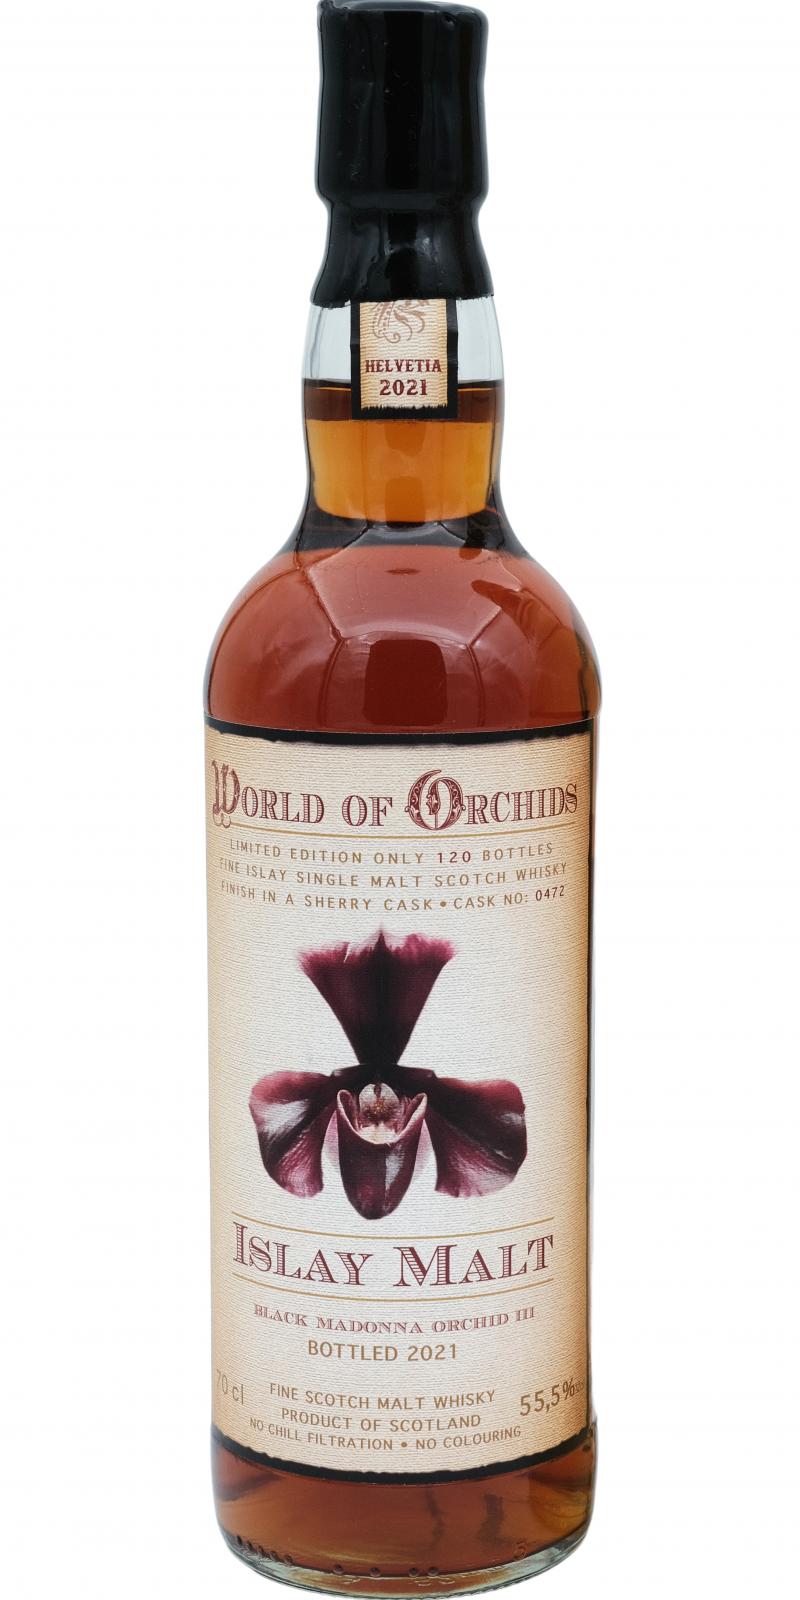 Islay Malt Black Madonna Orchid III JW World of Orchids Sherry Cask #0472 55.5% 700ml